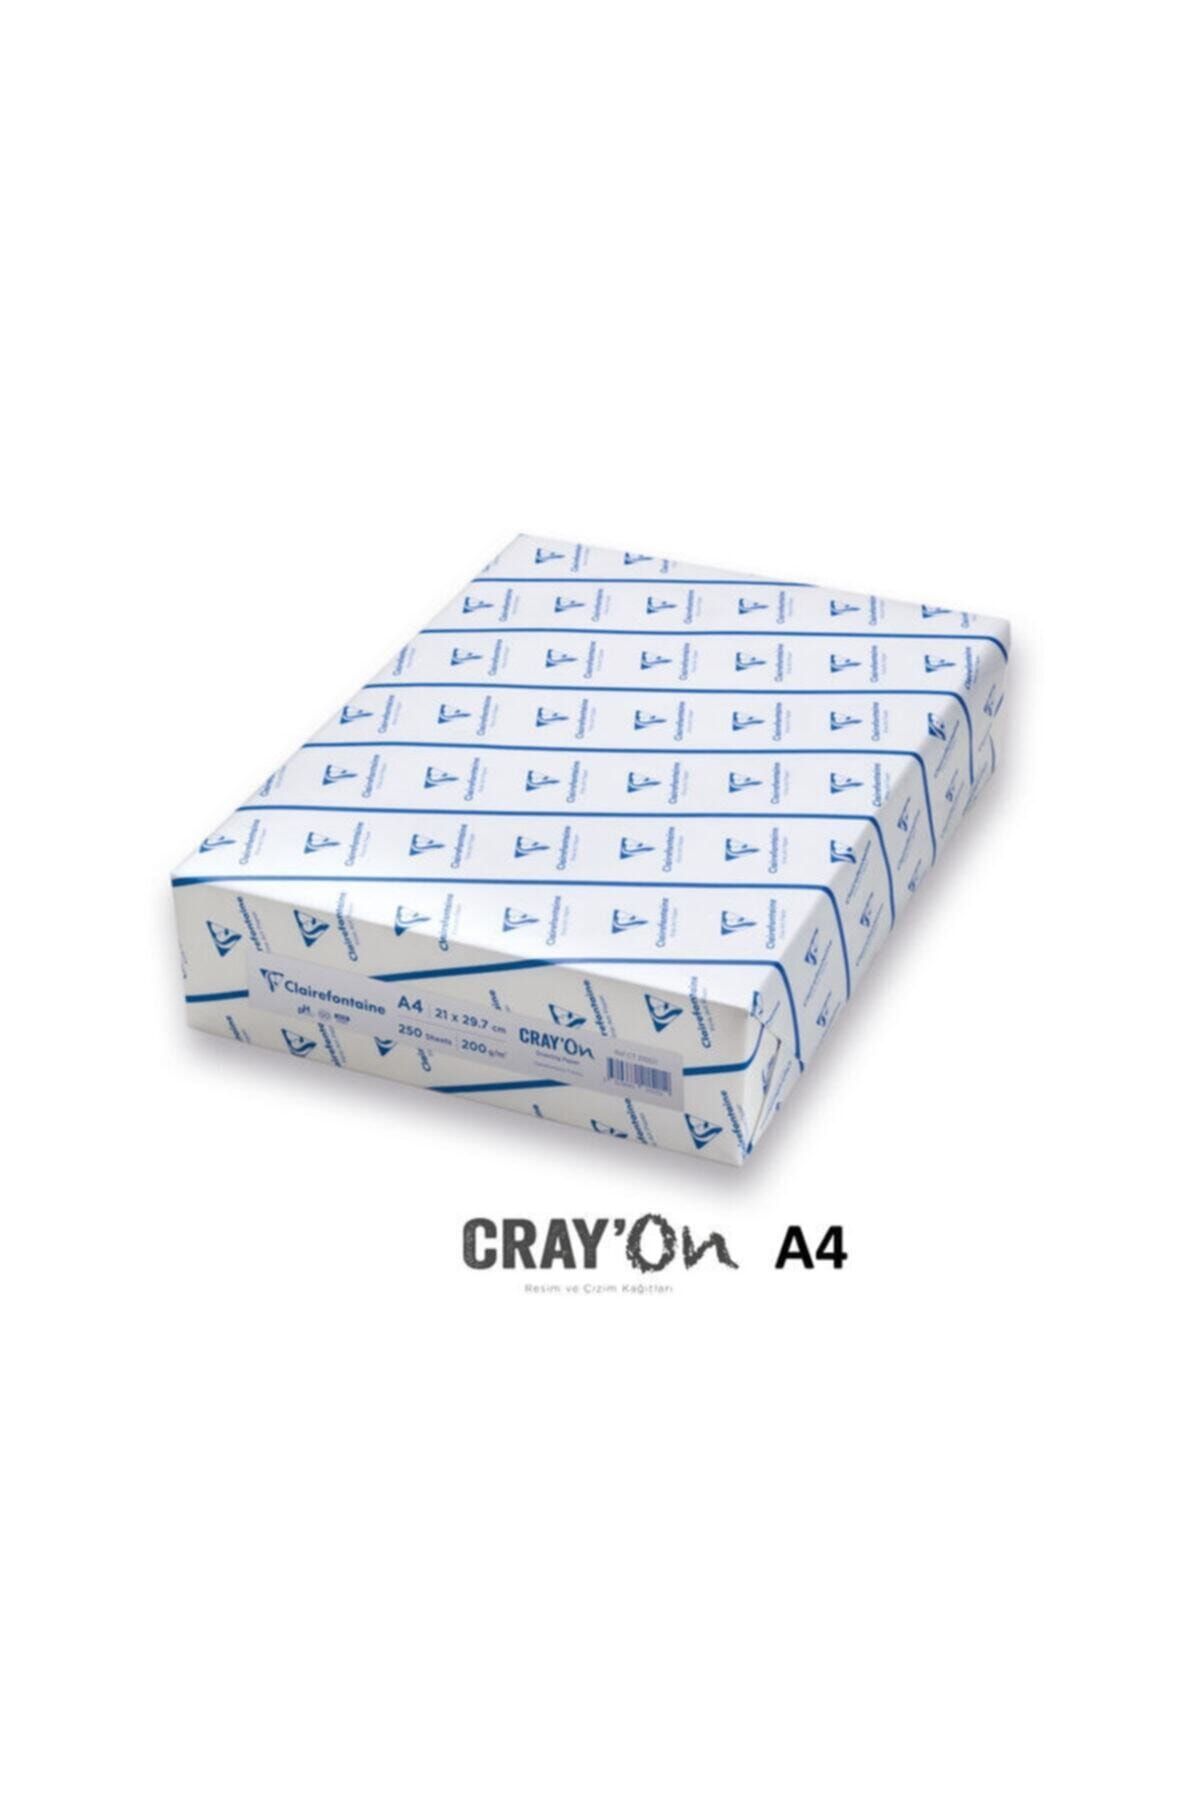 Clairefontaine Cray'on Resim Kağıdı 200 Gr A4 250'li Paket